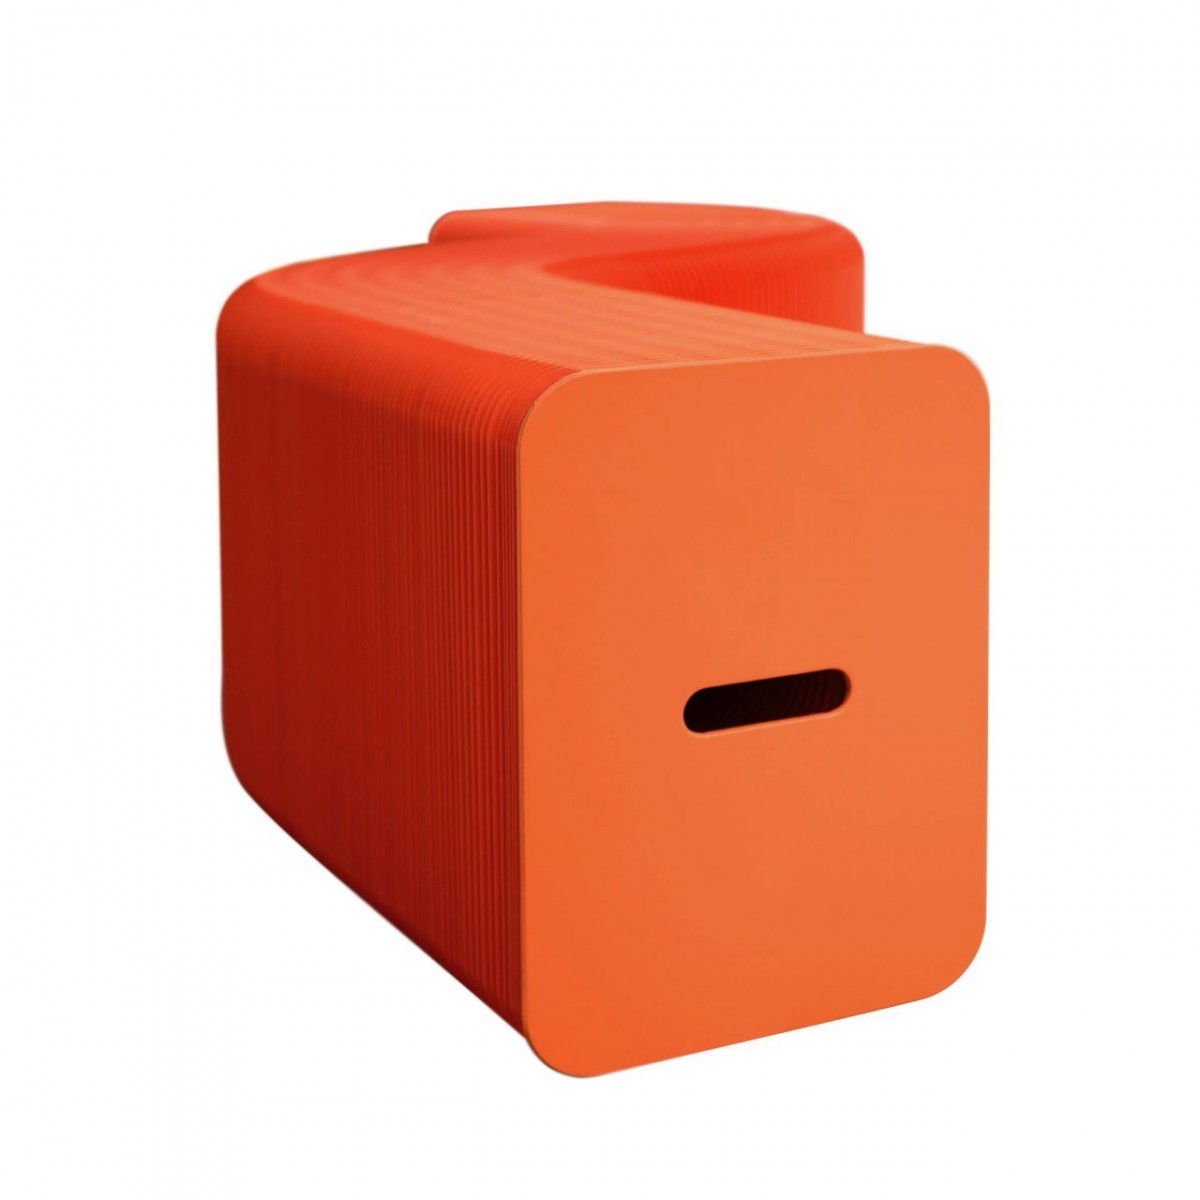 Banc pliable en carton orange